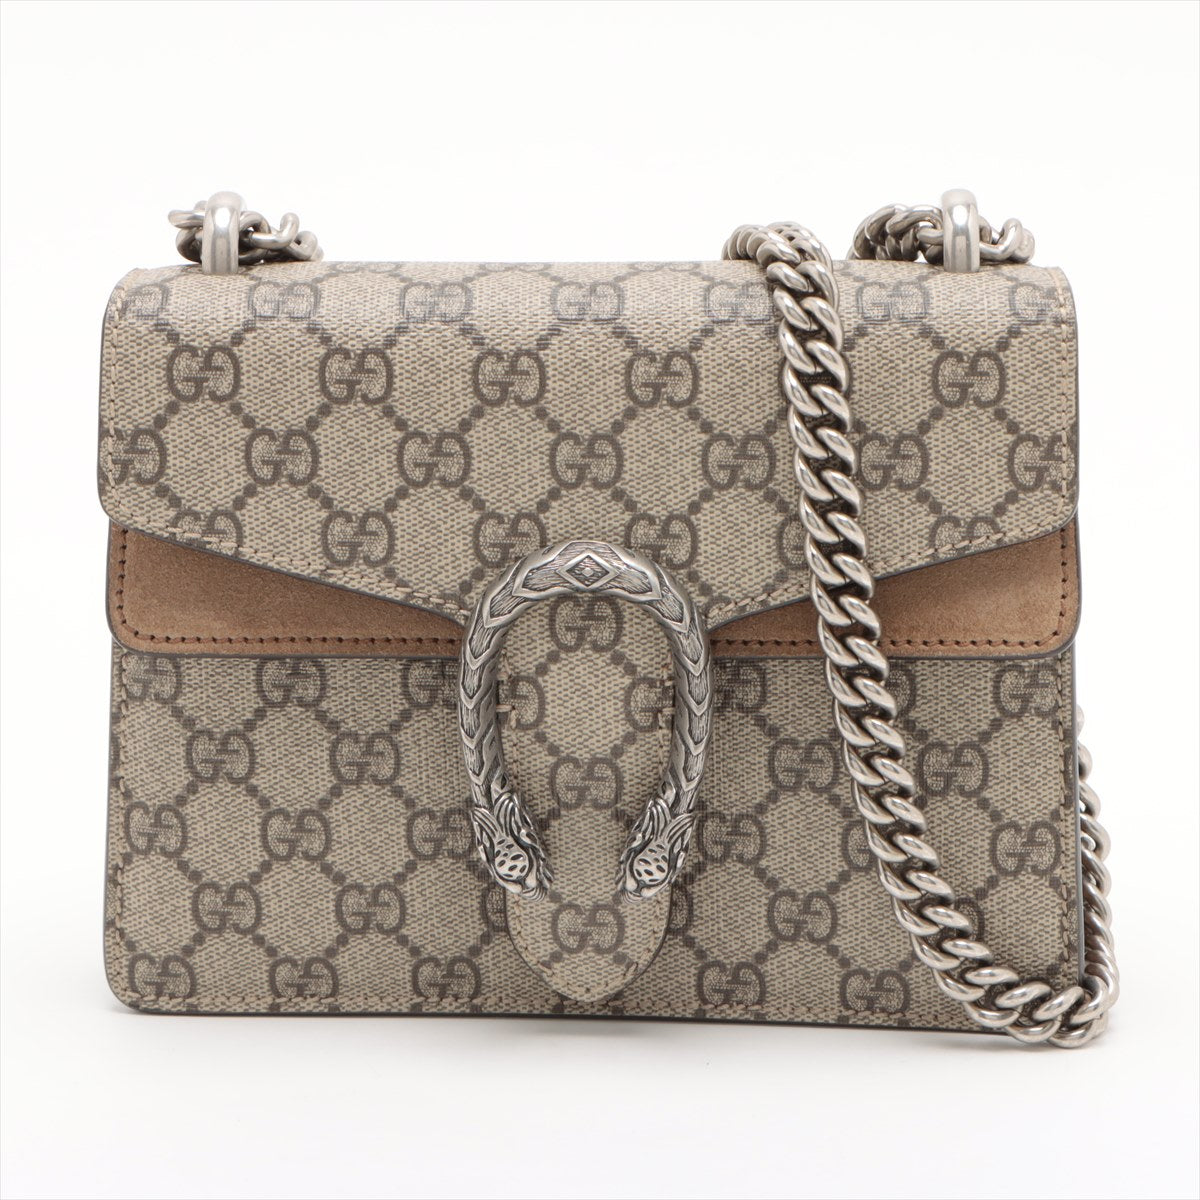 Gucci GG Supreme Dionysus Chain shoulder bag Beige 421970